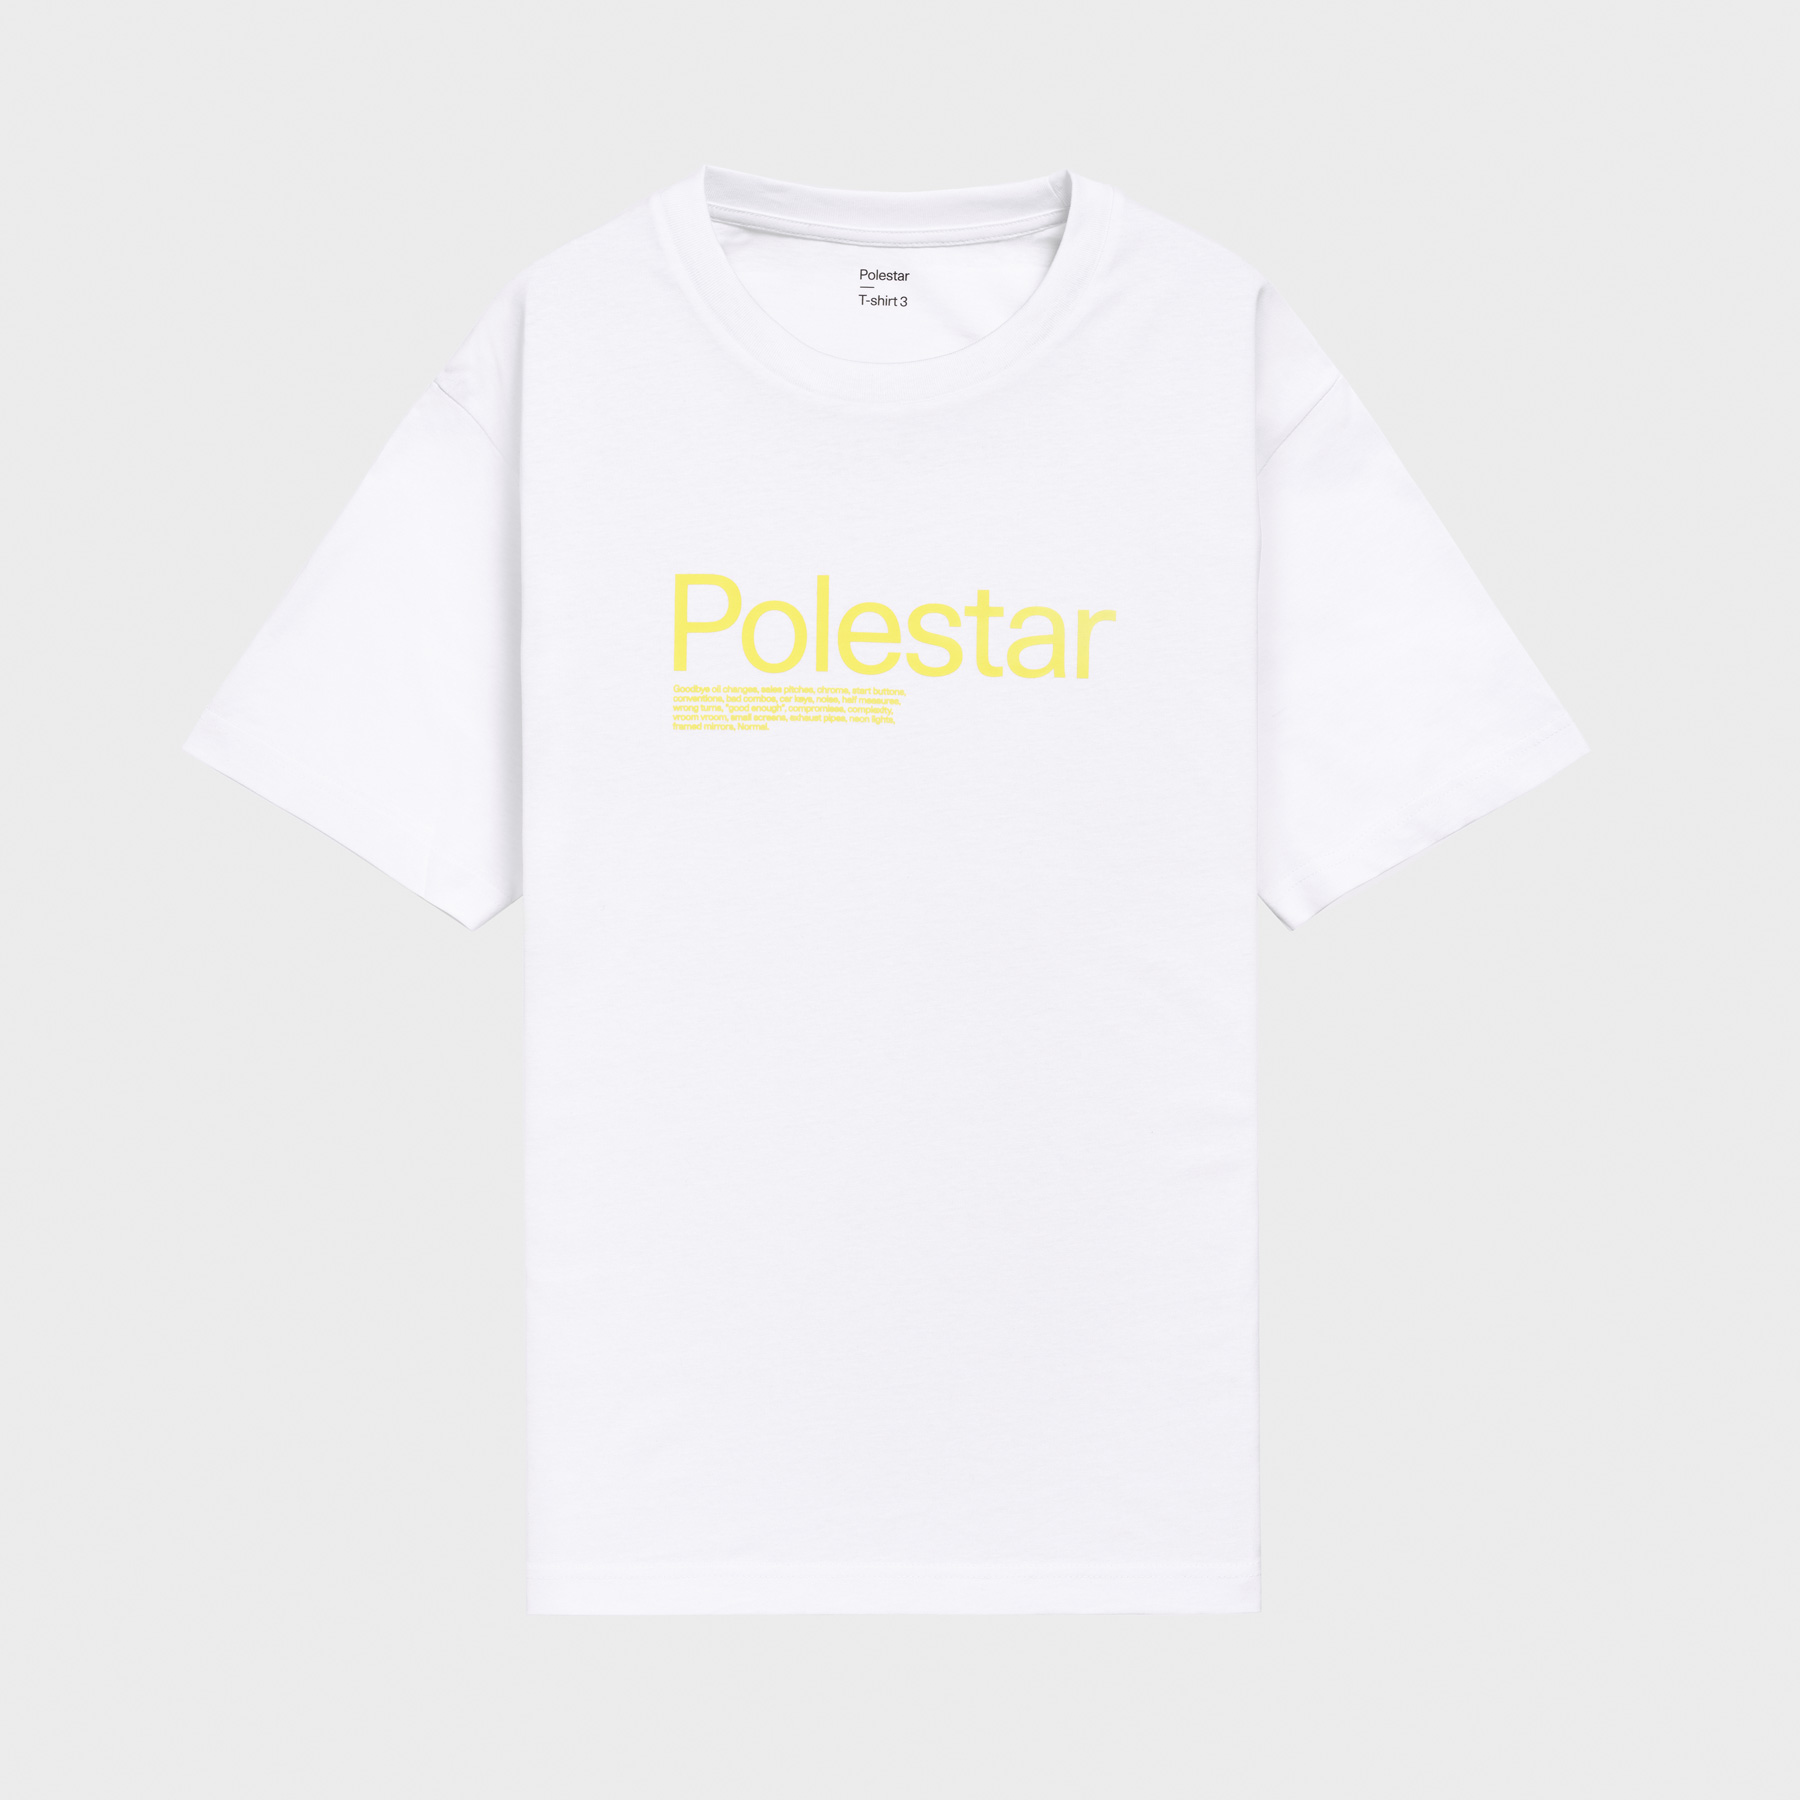 polestar merchandise